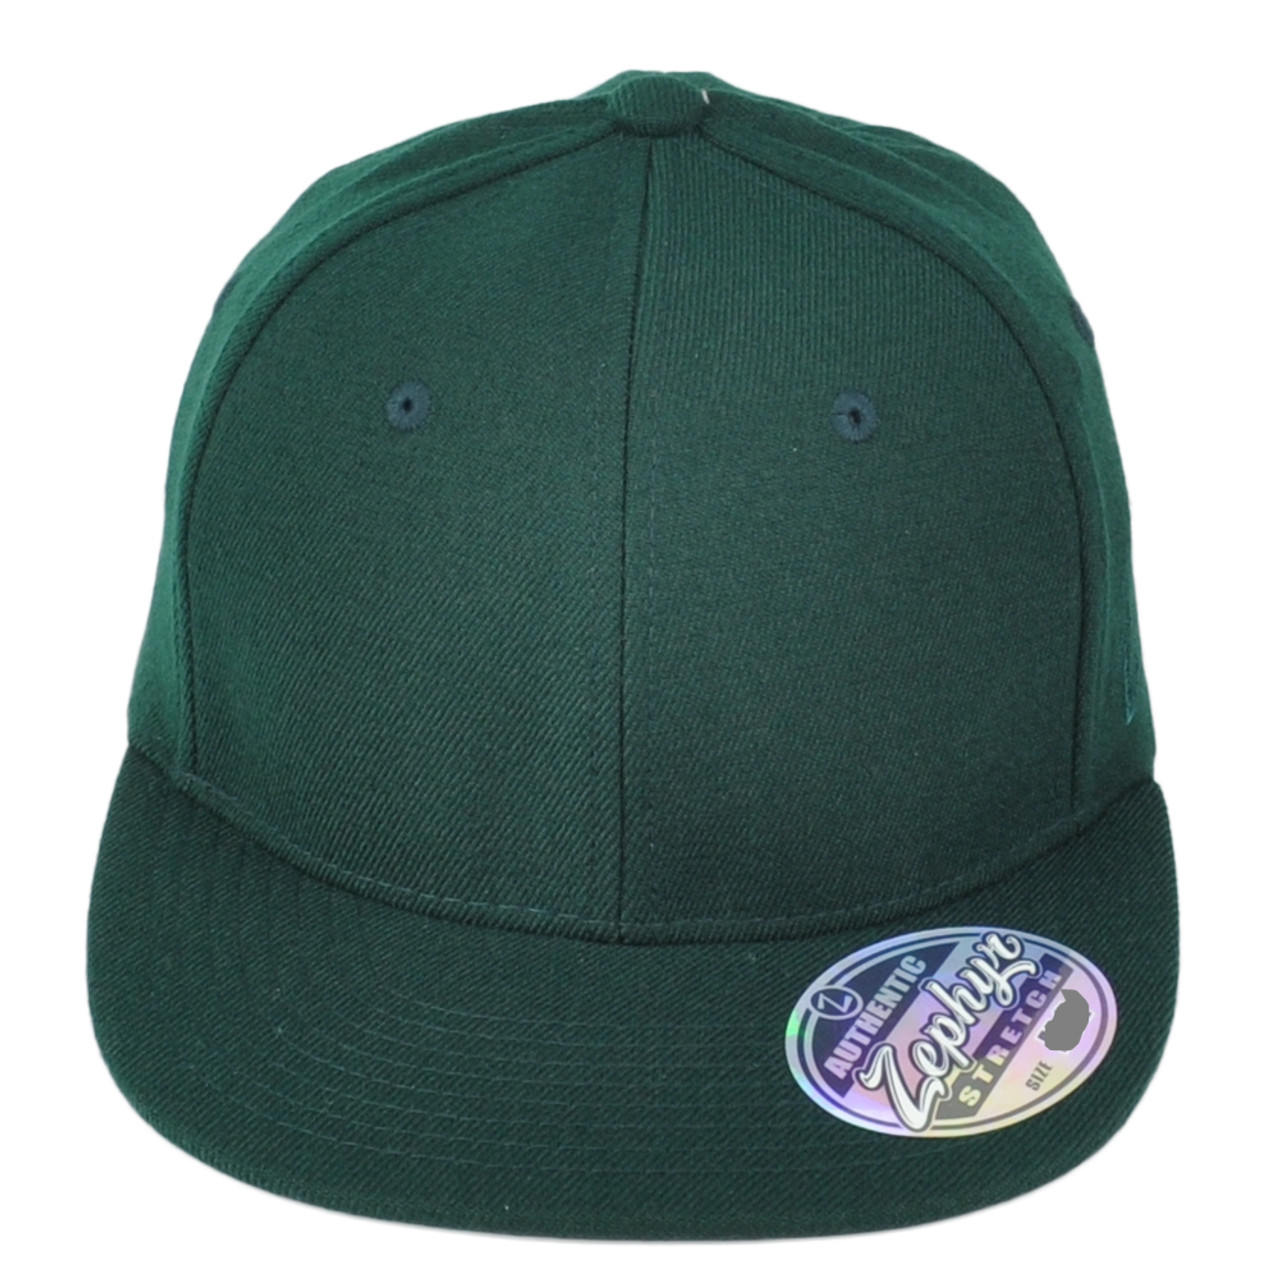 Zephyr Dark Forest Green Flex Medium/Large Cap Hat Flat Store Blank Bill Fit - Cap Stretch